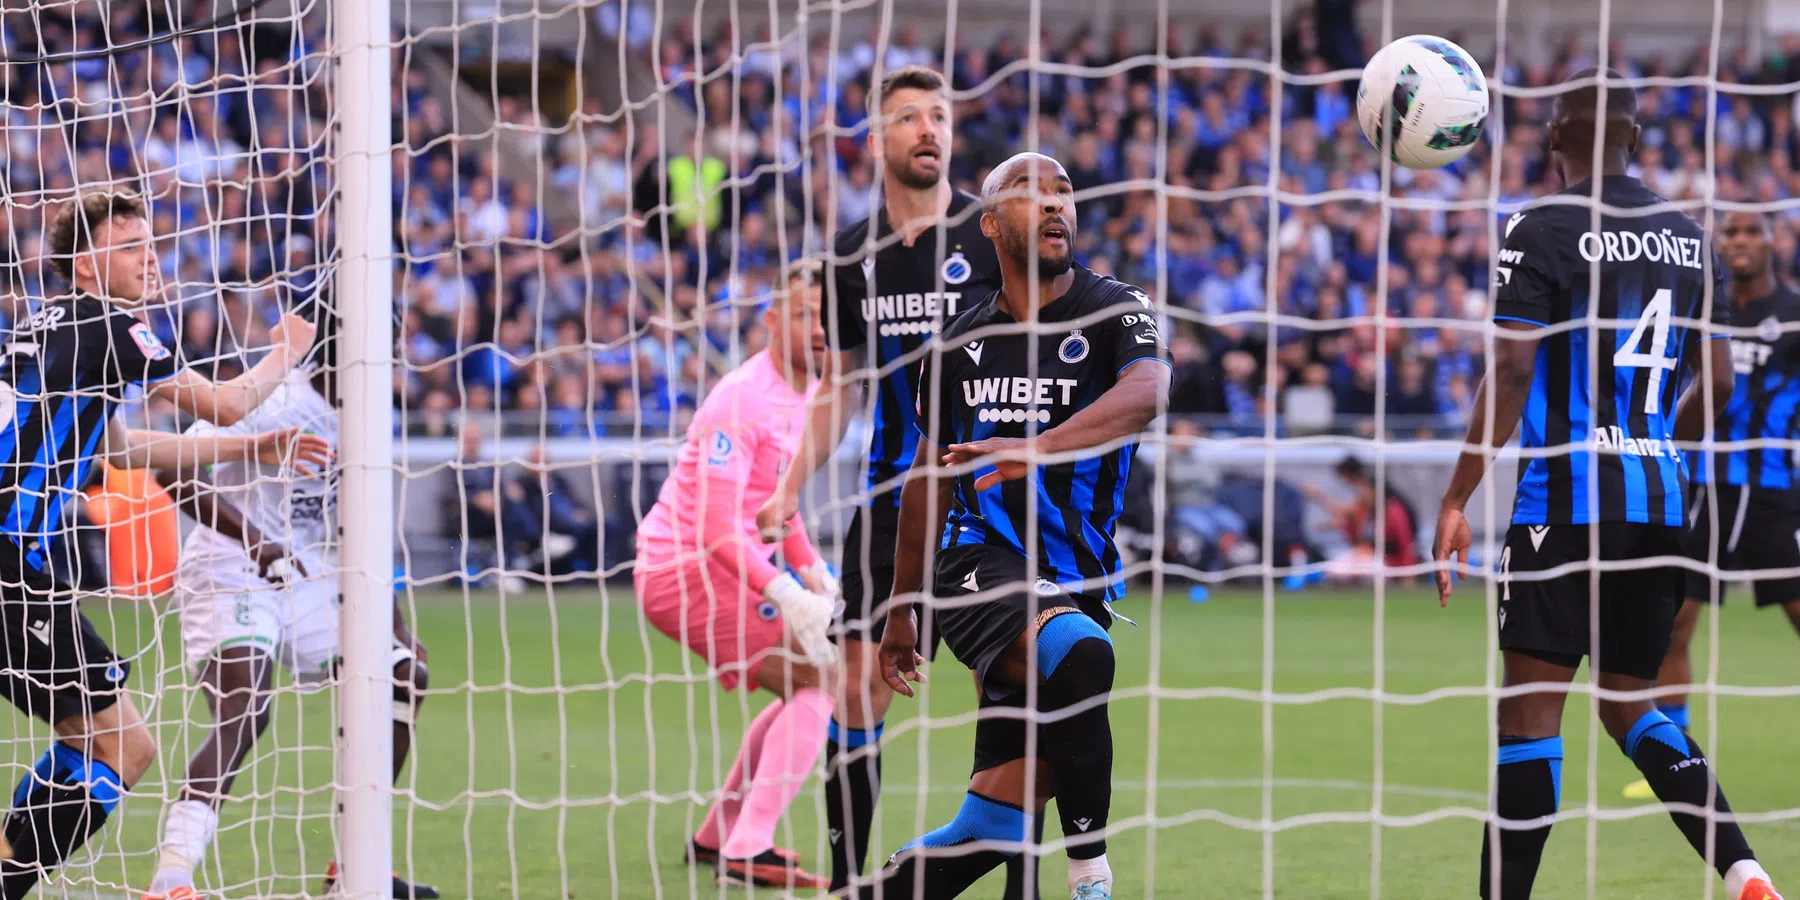 Club Brugge door oog van naald: allesbeslissende goal afgekeurd, landstitel binnen